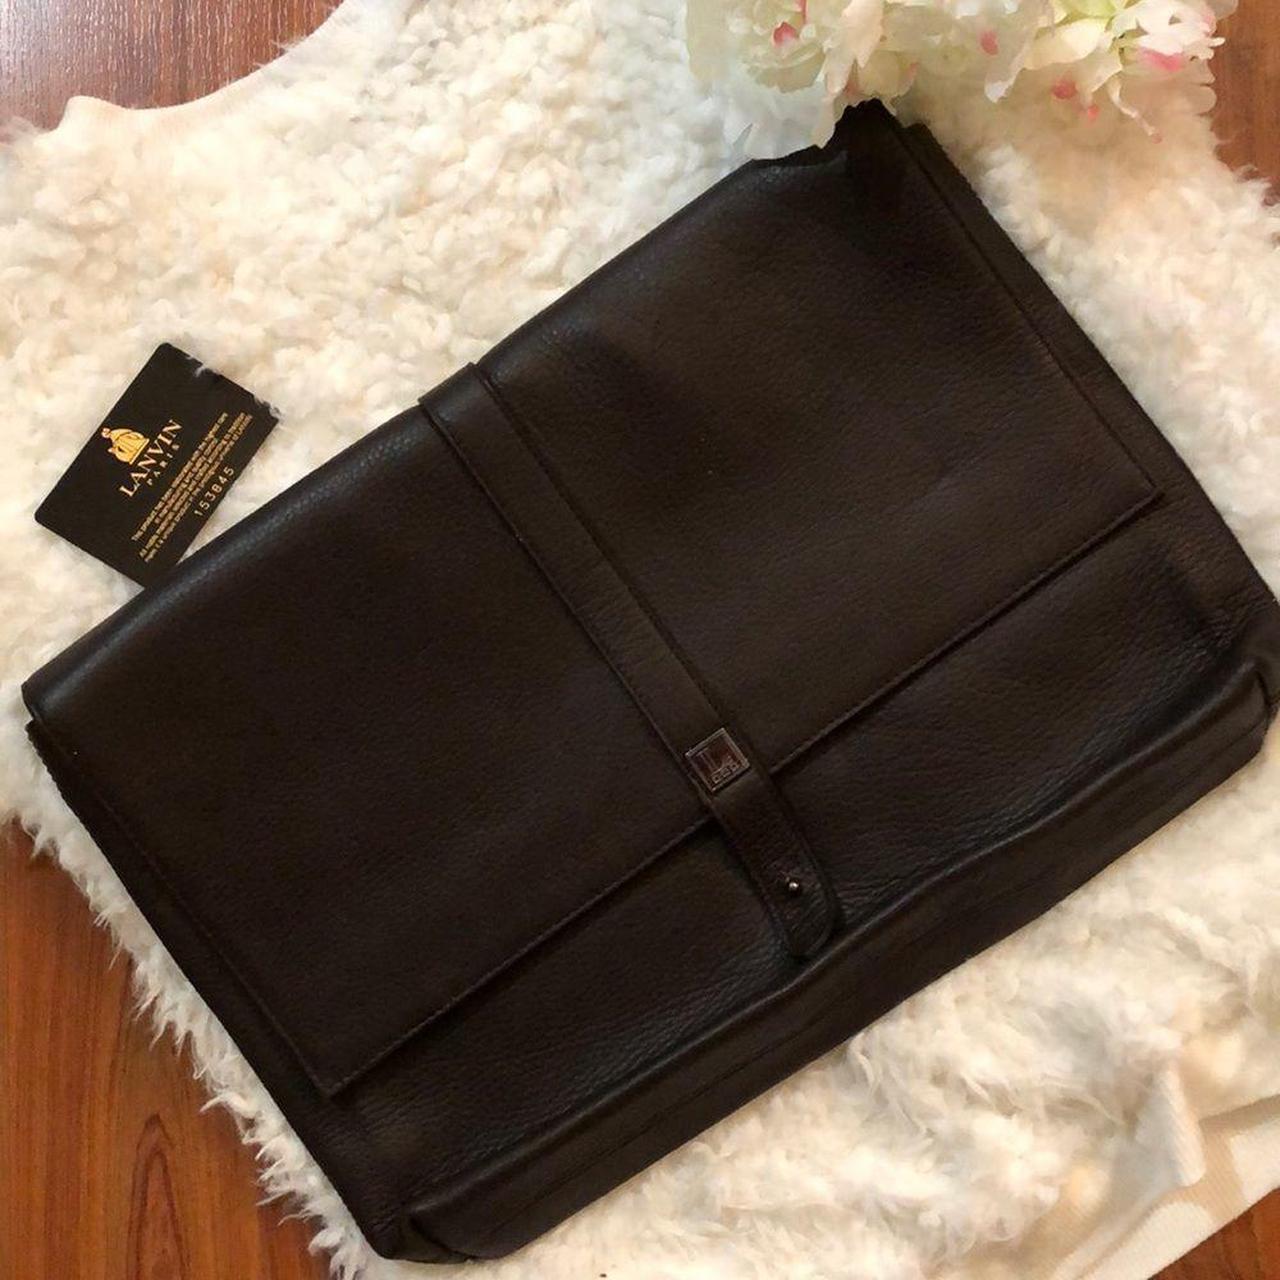 LANVIN PARIS Leather shoulder bag, Tan / black in beautiful condition | eBay